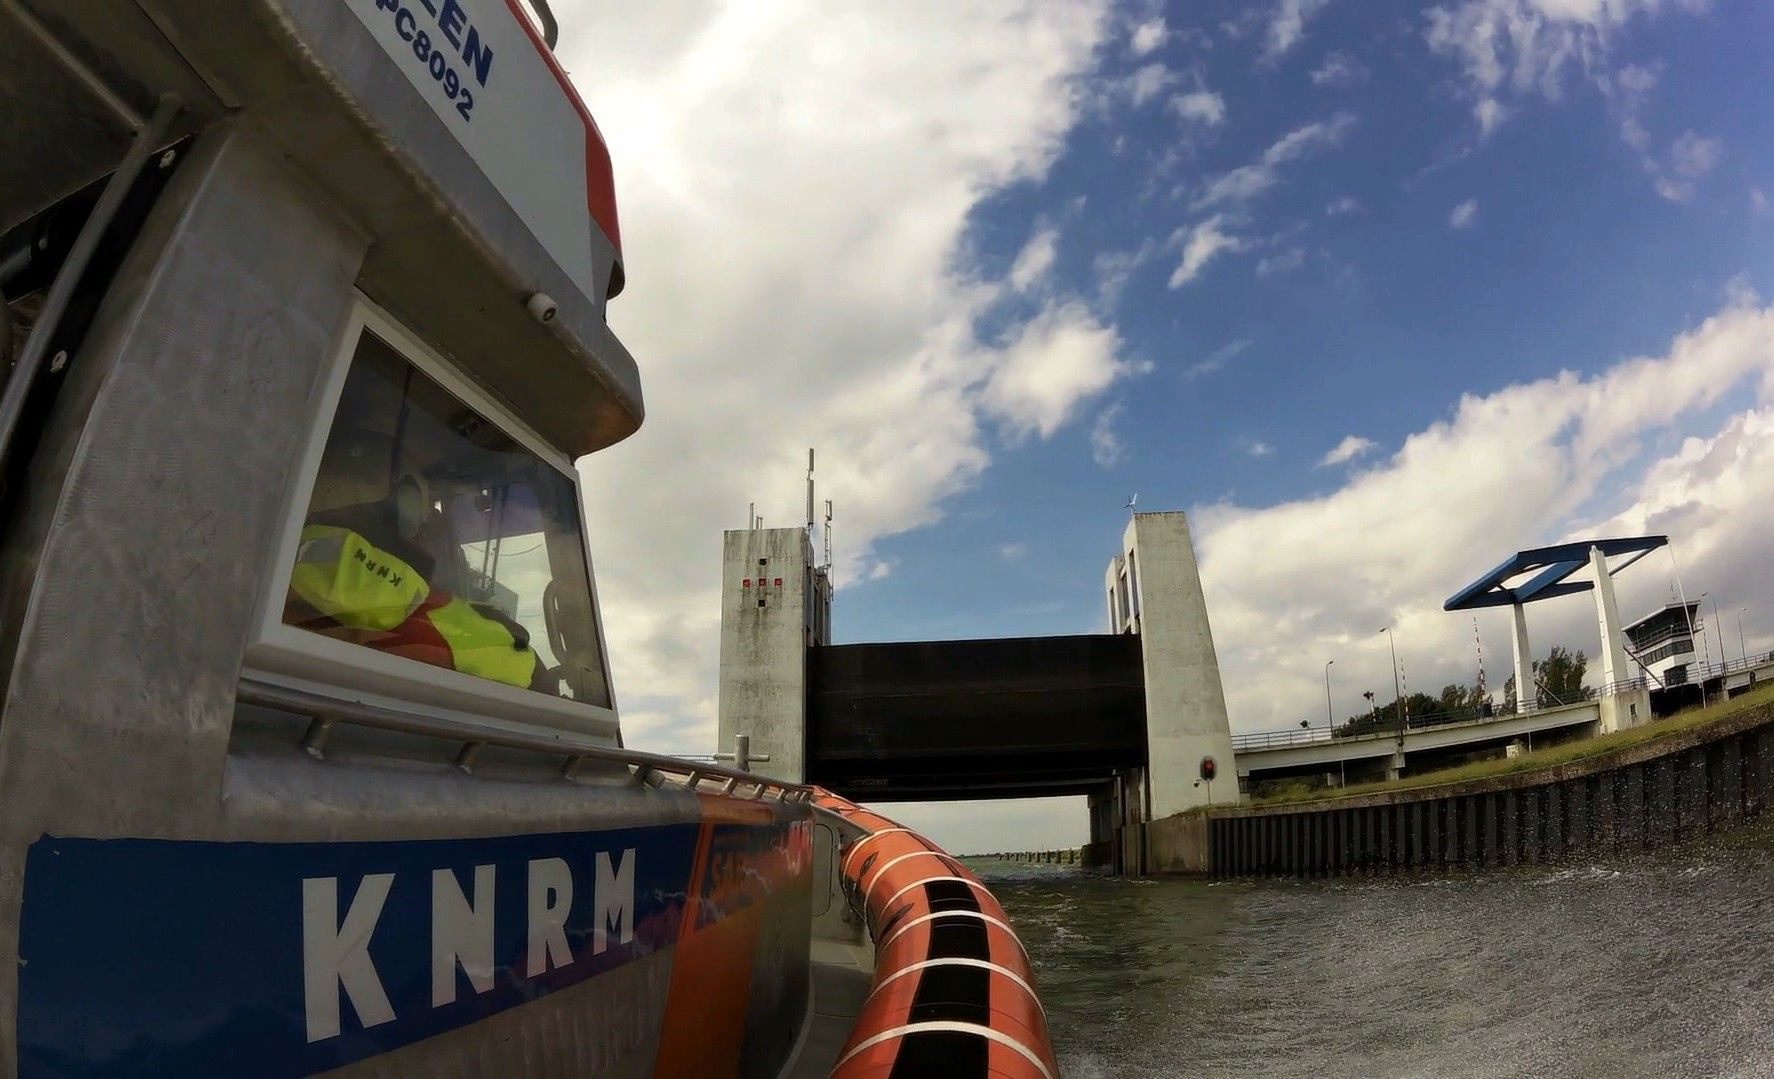 Reddingboot Watersport passeert met spoed het spuikanaal onderweg naar het Markermeer. KNRM Enkhuize